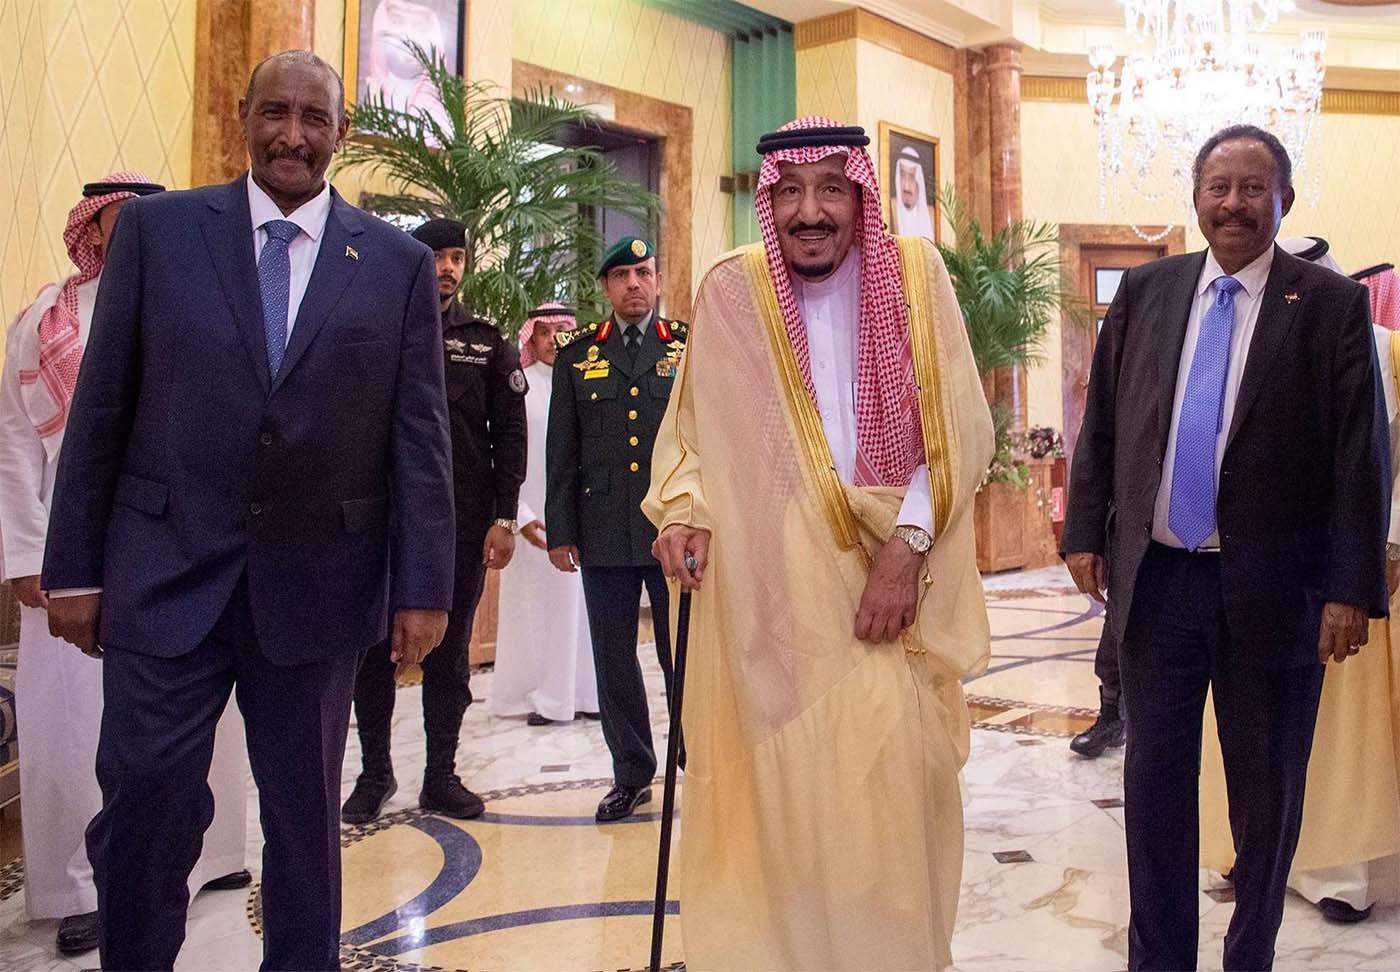 Saudi King Salman bin Abdulaziz Al Saud (C) receives head of the Ruling Council of Sudan Abdel Fattah al-Burhan (L) and Sudanese Prime Minister Abdallah Hamdouk